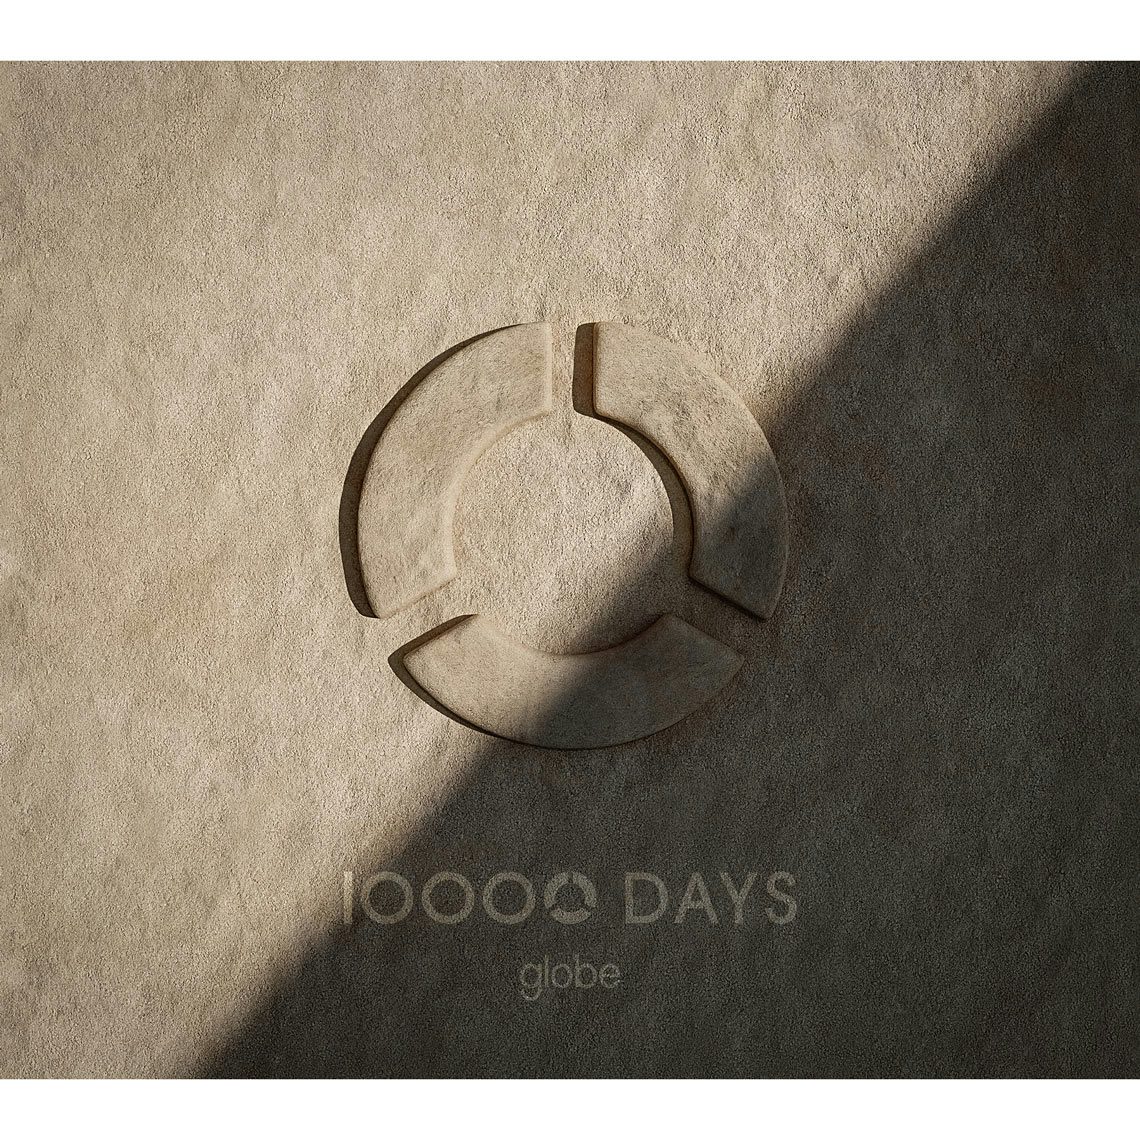 [Limited Edition]10000 DAYS（12CD+Blu-ray Audio+4Blu-ray Disc）